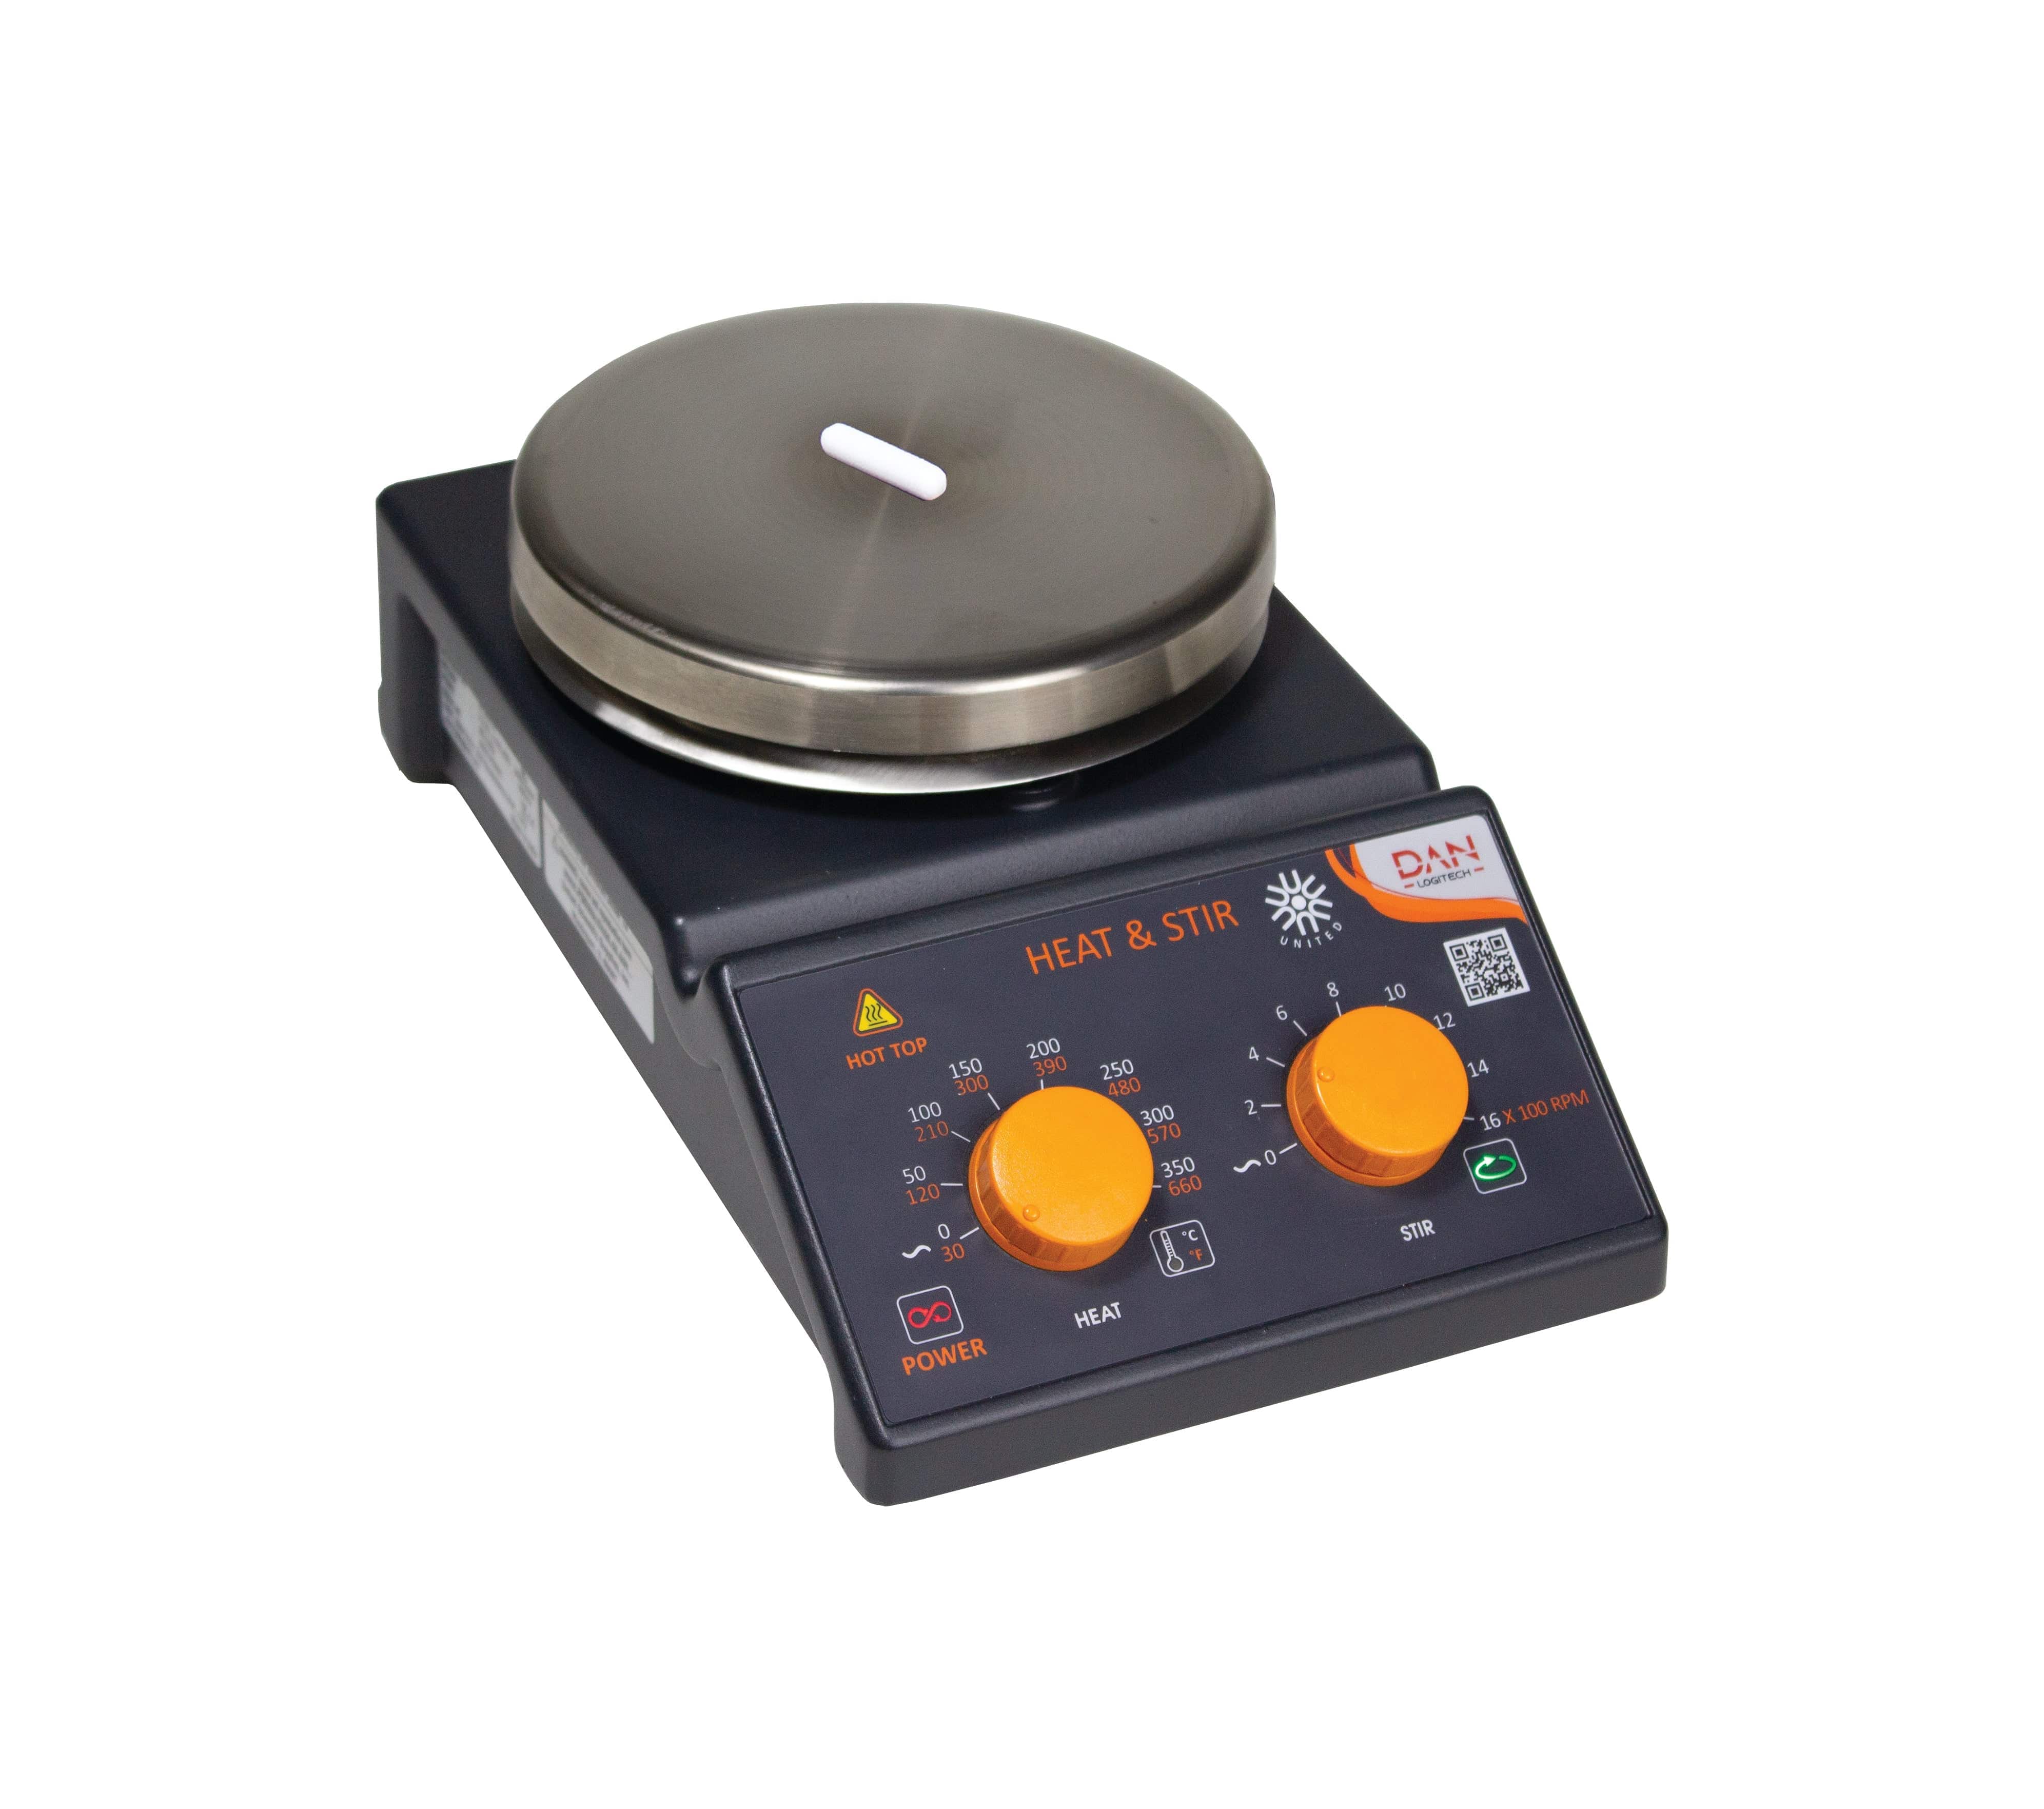 Laboratory Hot Plate Magnetic Stirrer, 1L, 0-1600 RPM